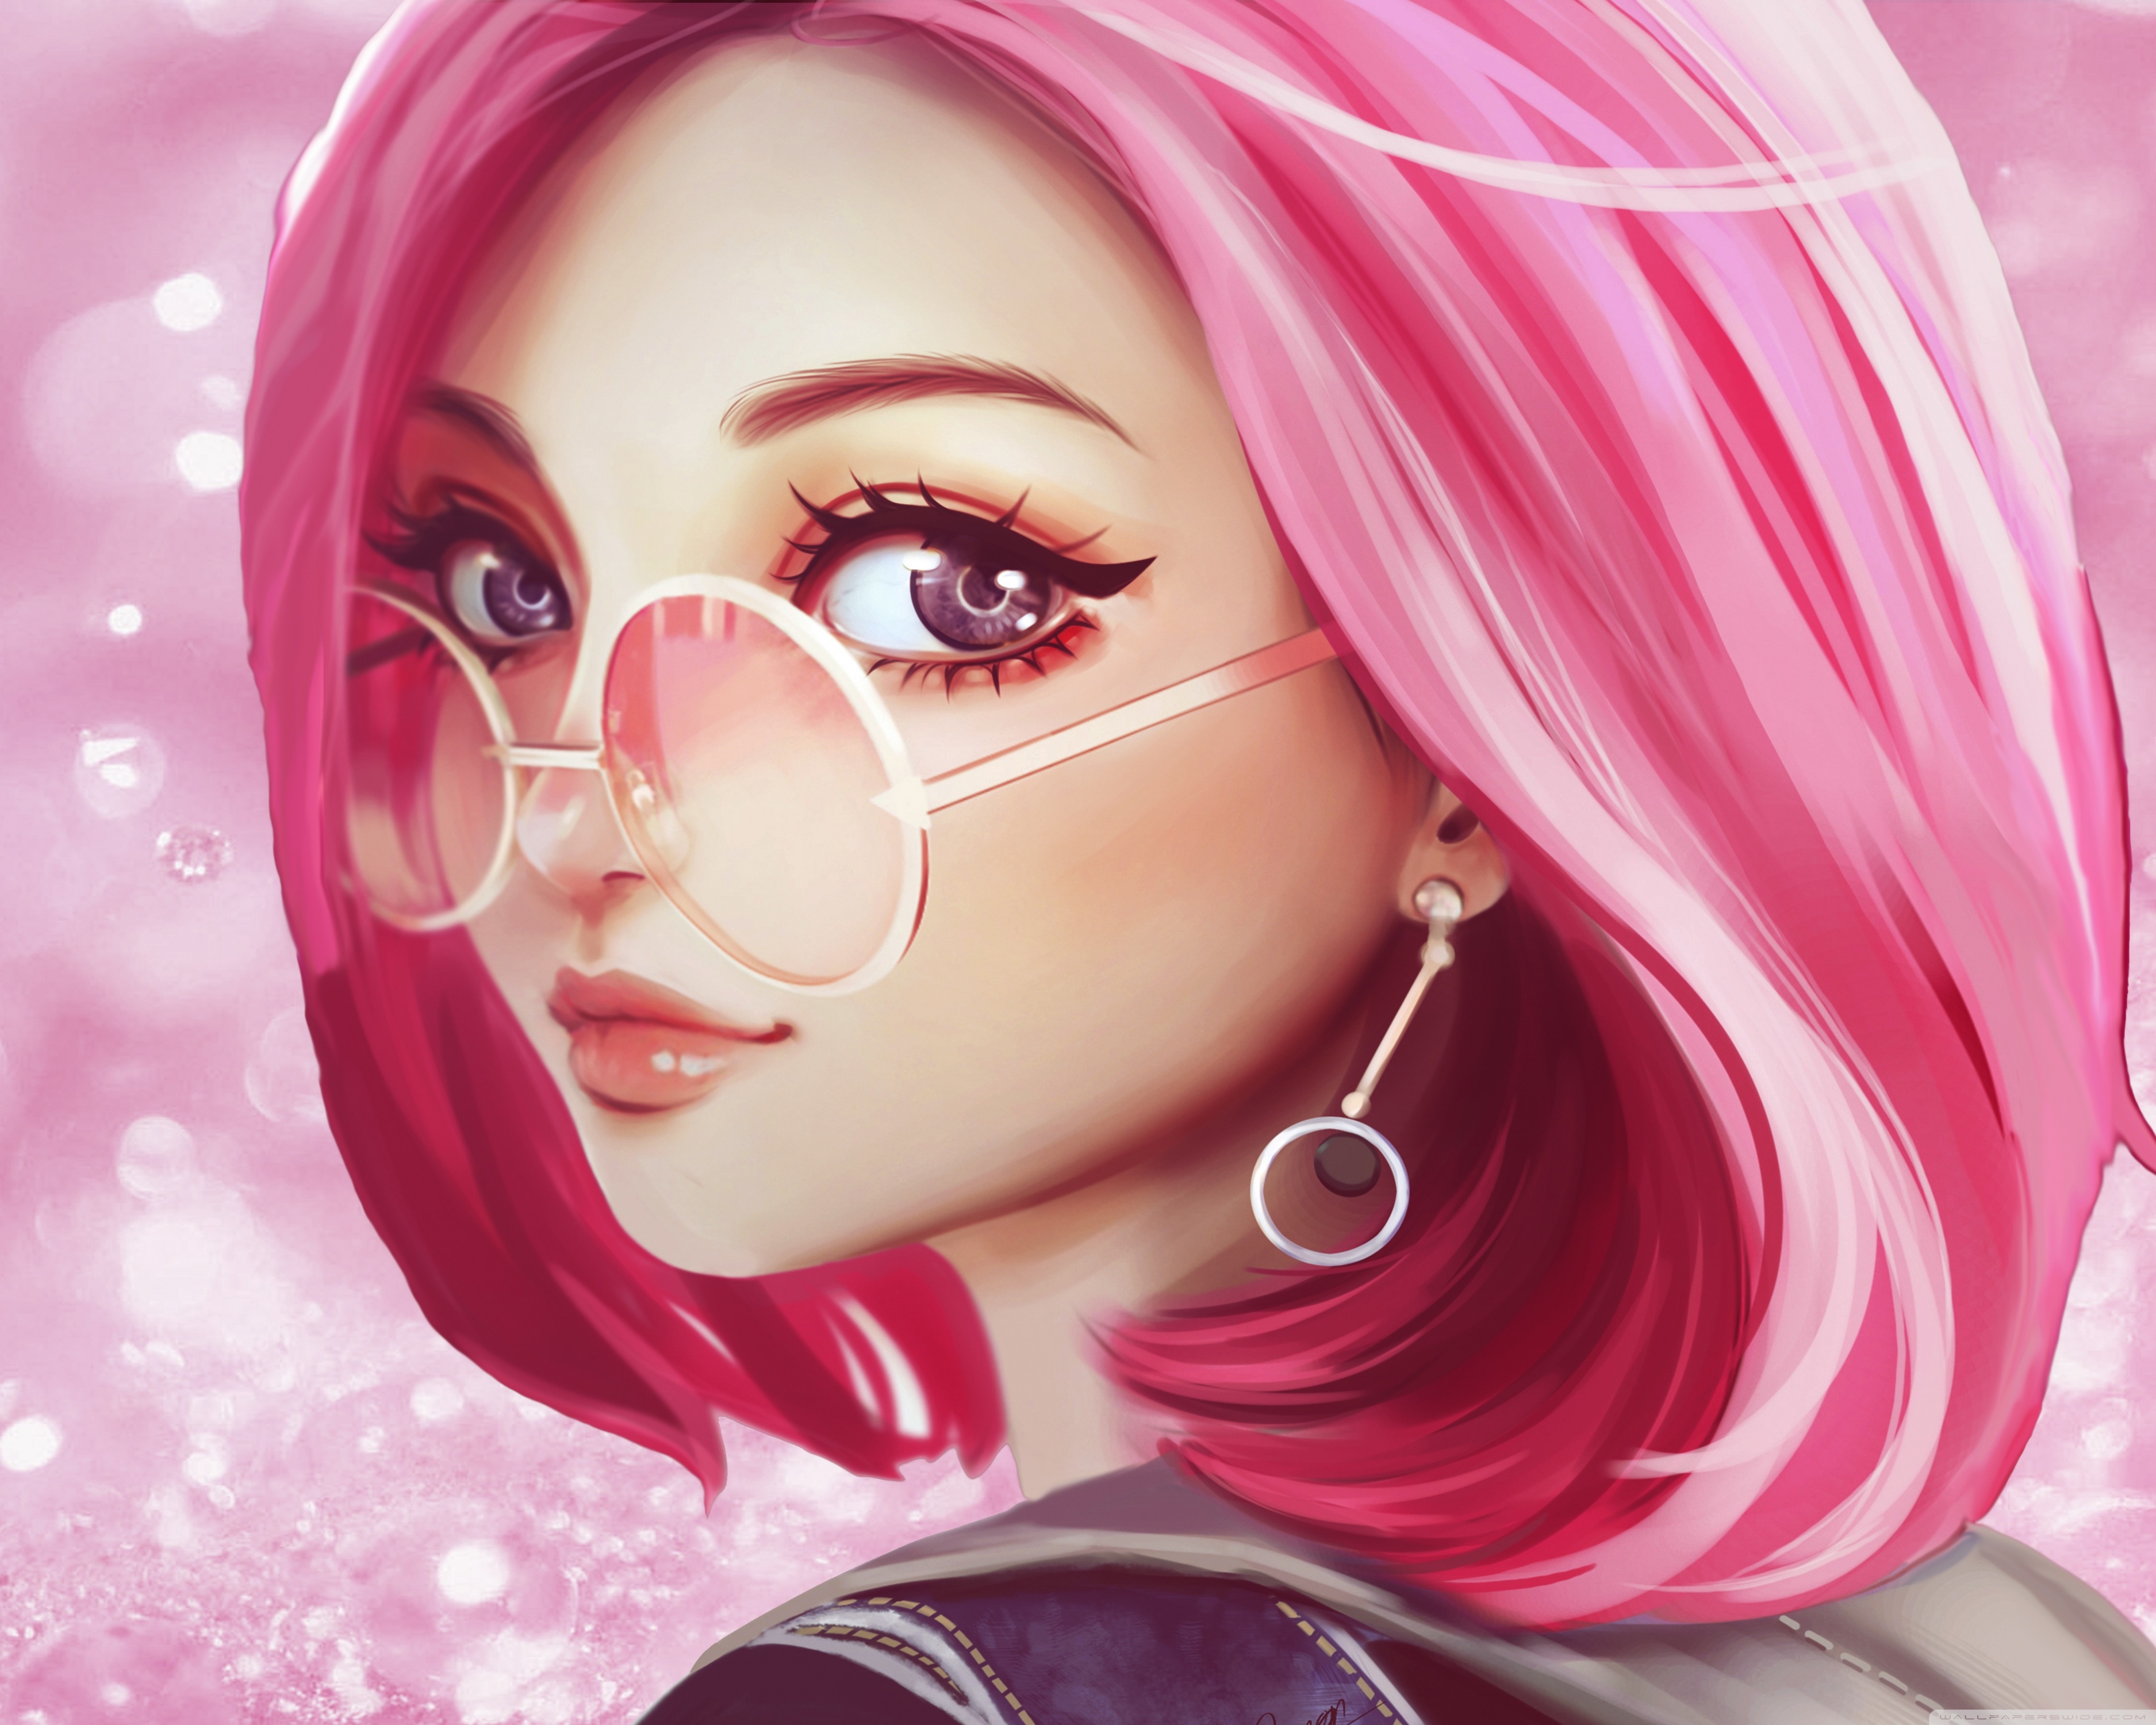 Cute Girl Pink Hair Sunglasses Digital Art Drawing Ultra HD Desktop  Background Wallpaper for 4K UHD TV : Widescreen & UltraWide Desktop &  Laptop : Multi Display, Dual & Triple Monitor : Tablet : Smartphone